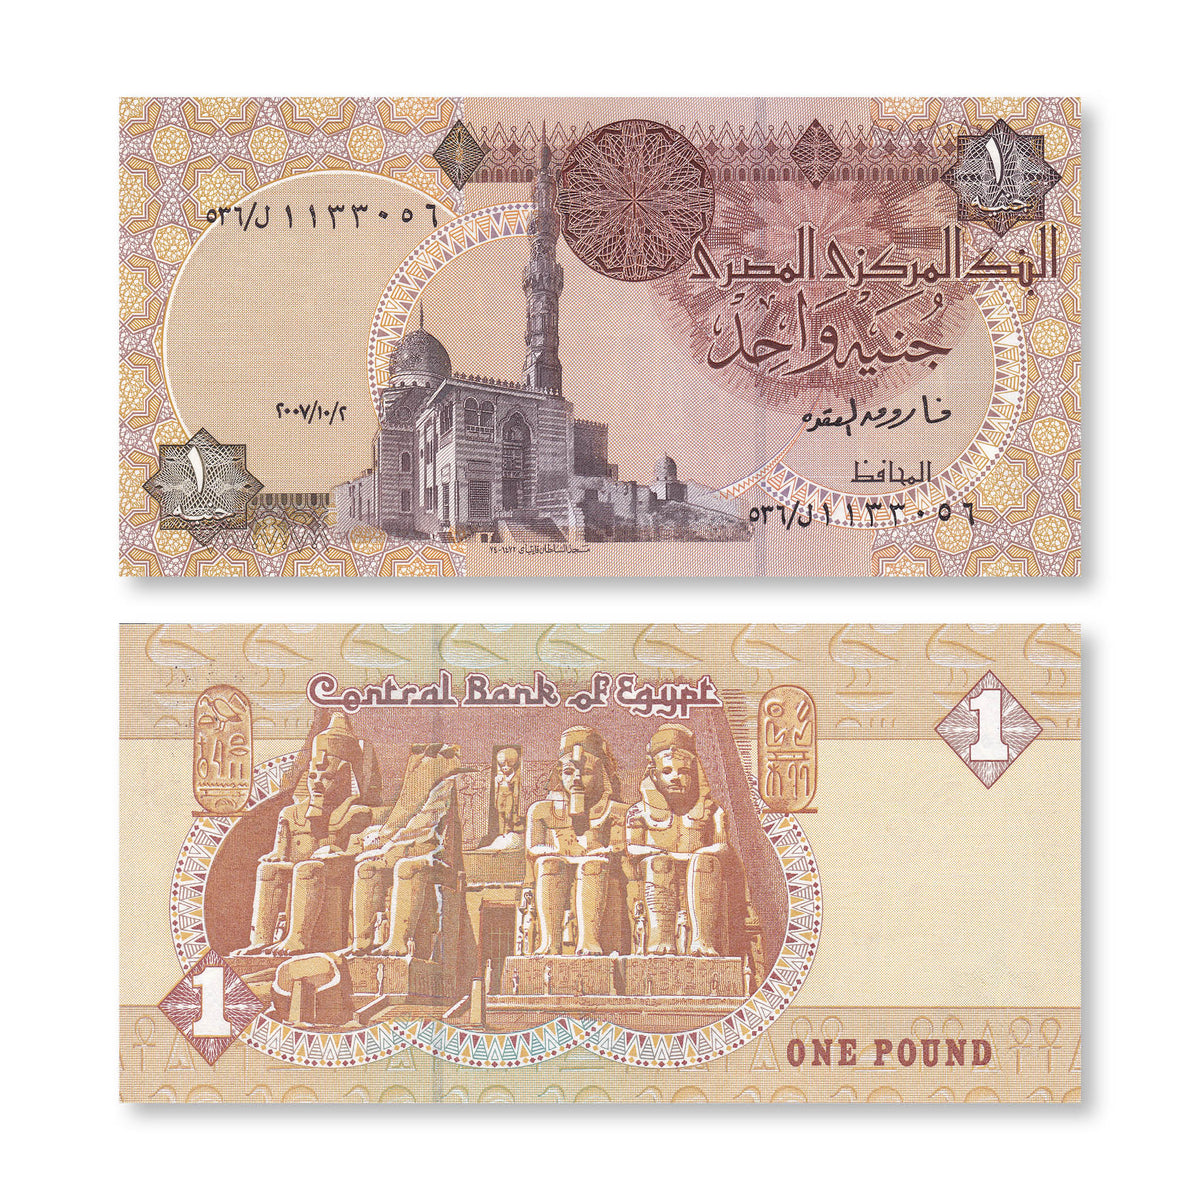 Egypt 1 Pound, 2007, B316m, P50j, UNC - Robert's World Money - World Banknotes